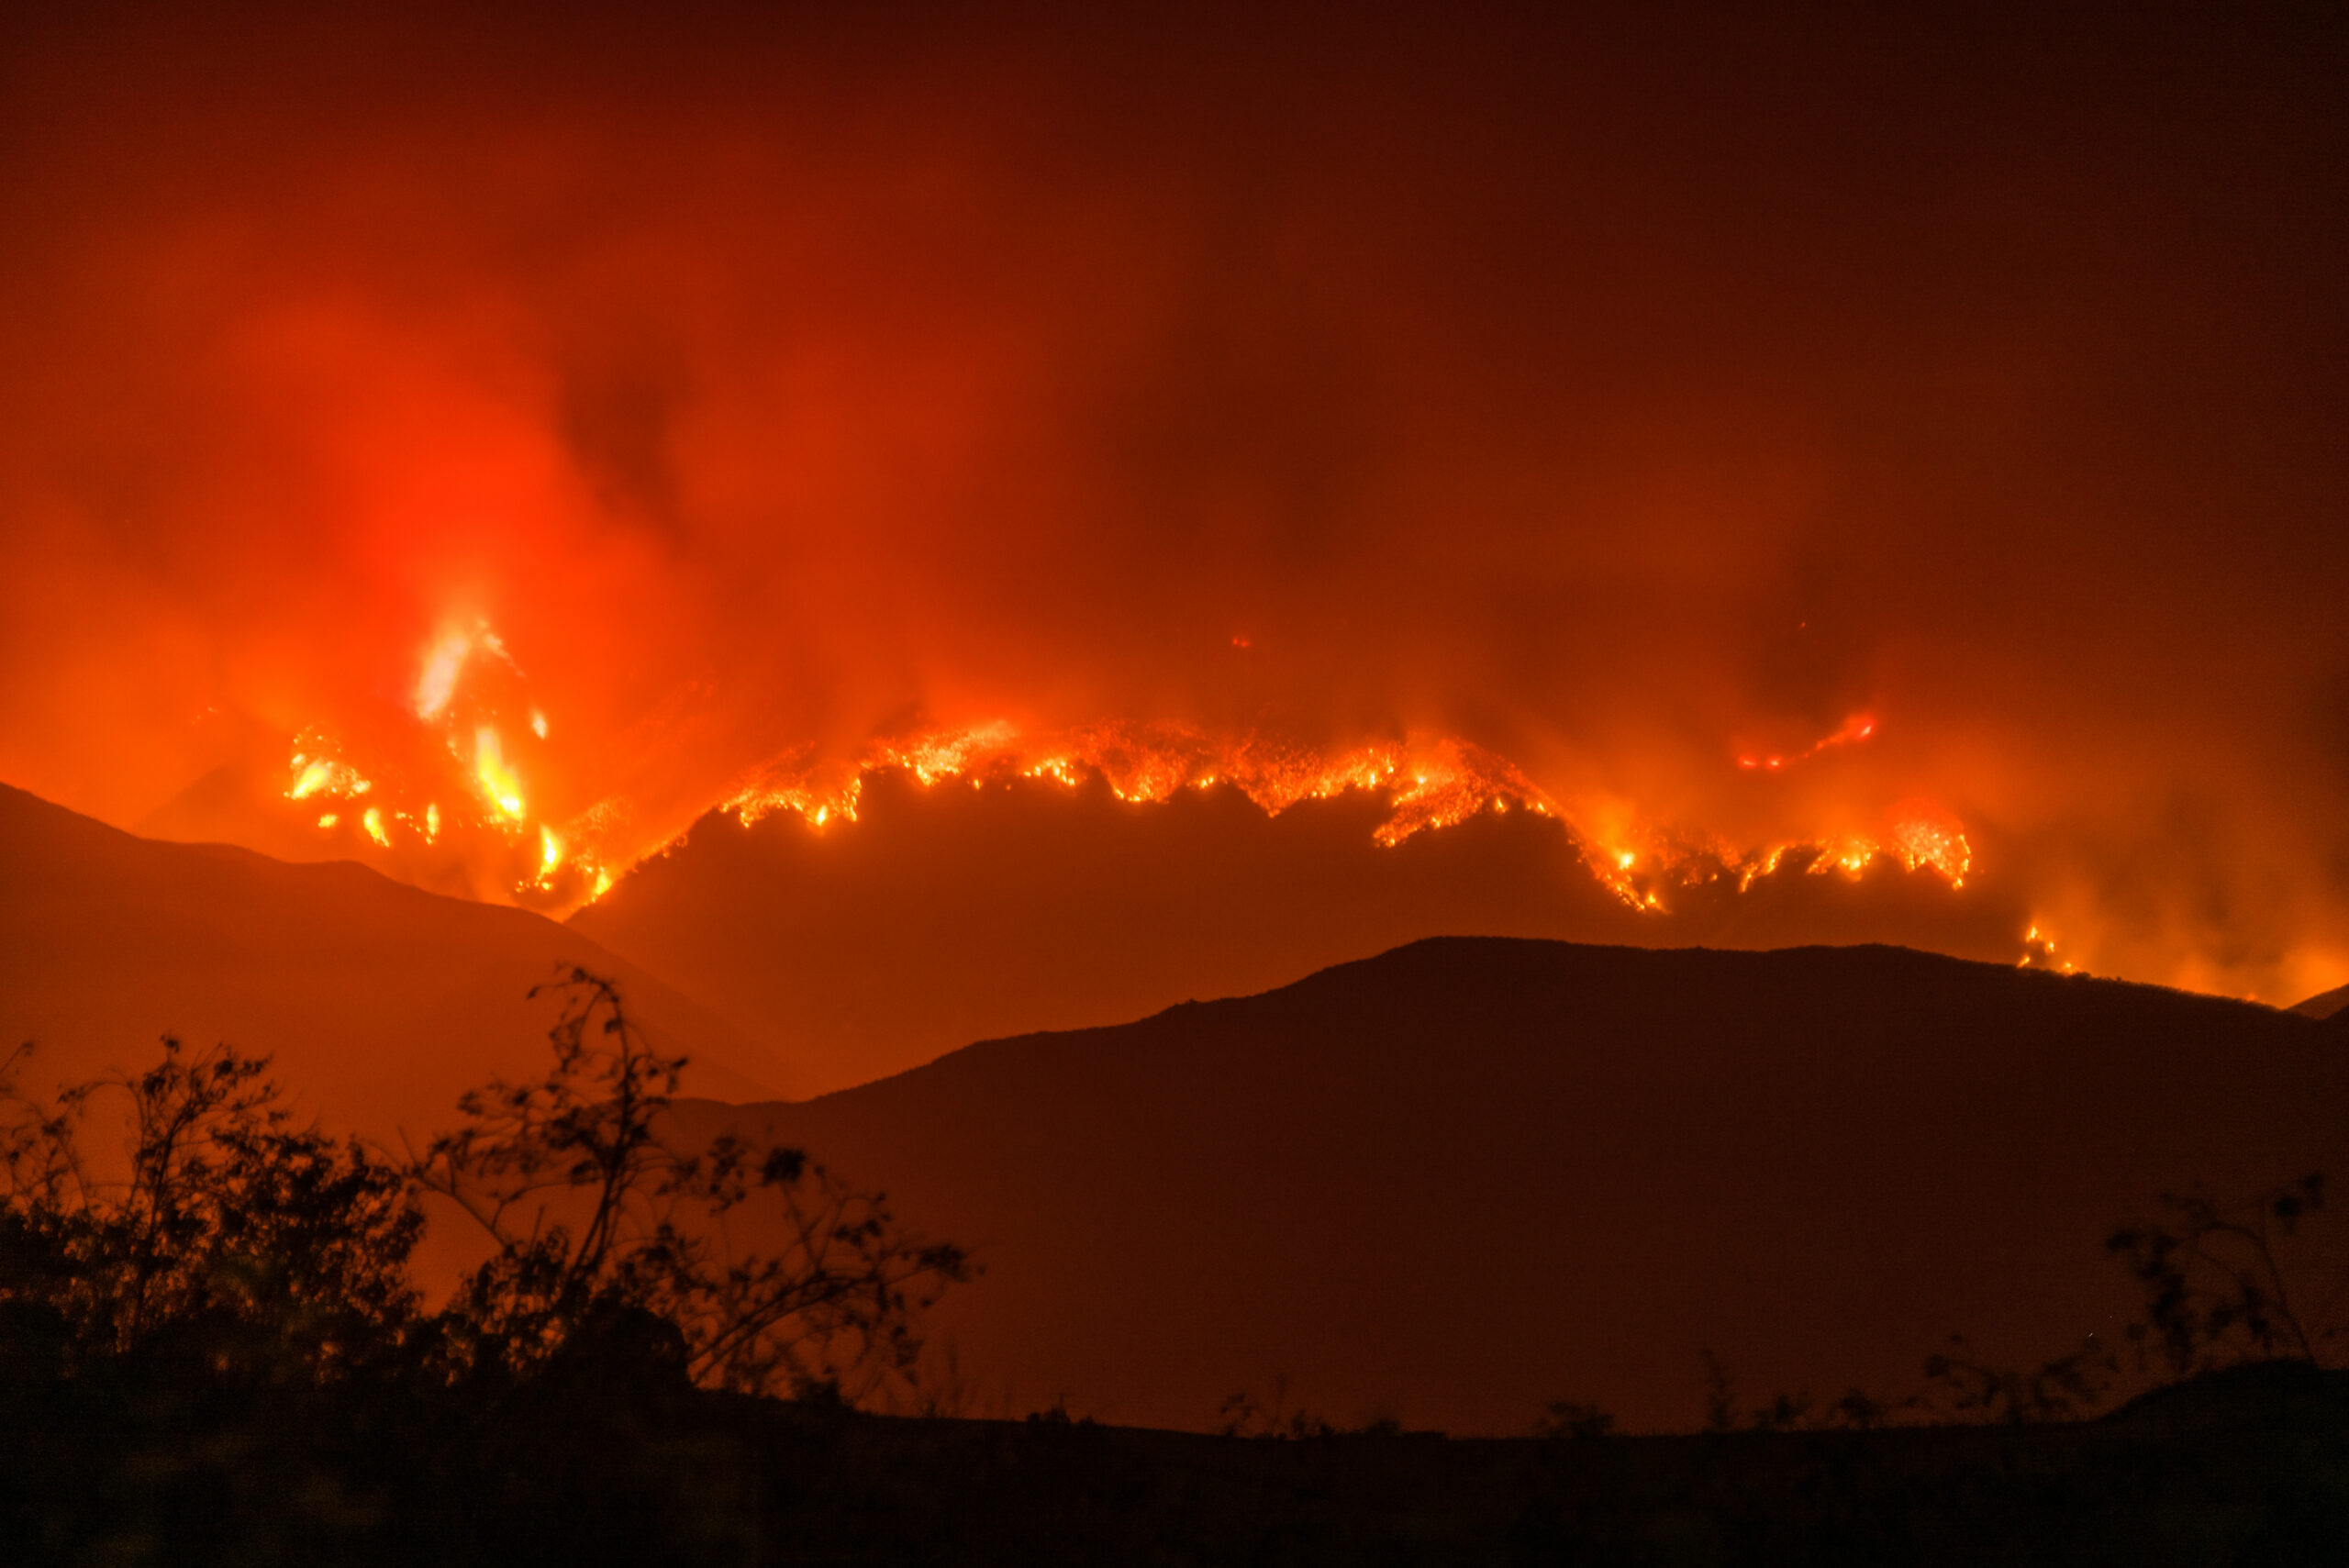 Whittier Fire, Goleta, California, July 13, 2017 (photo by Glenn Beltz, CC BY 2.0).